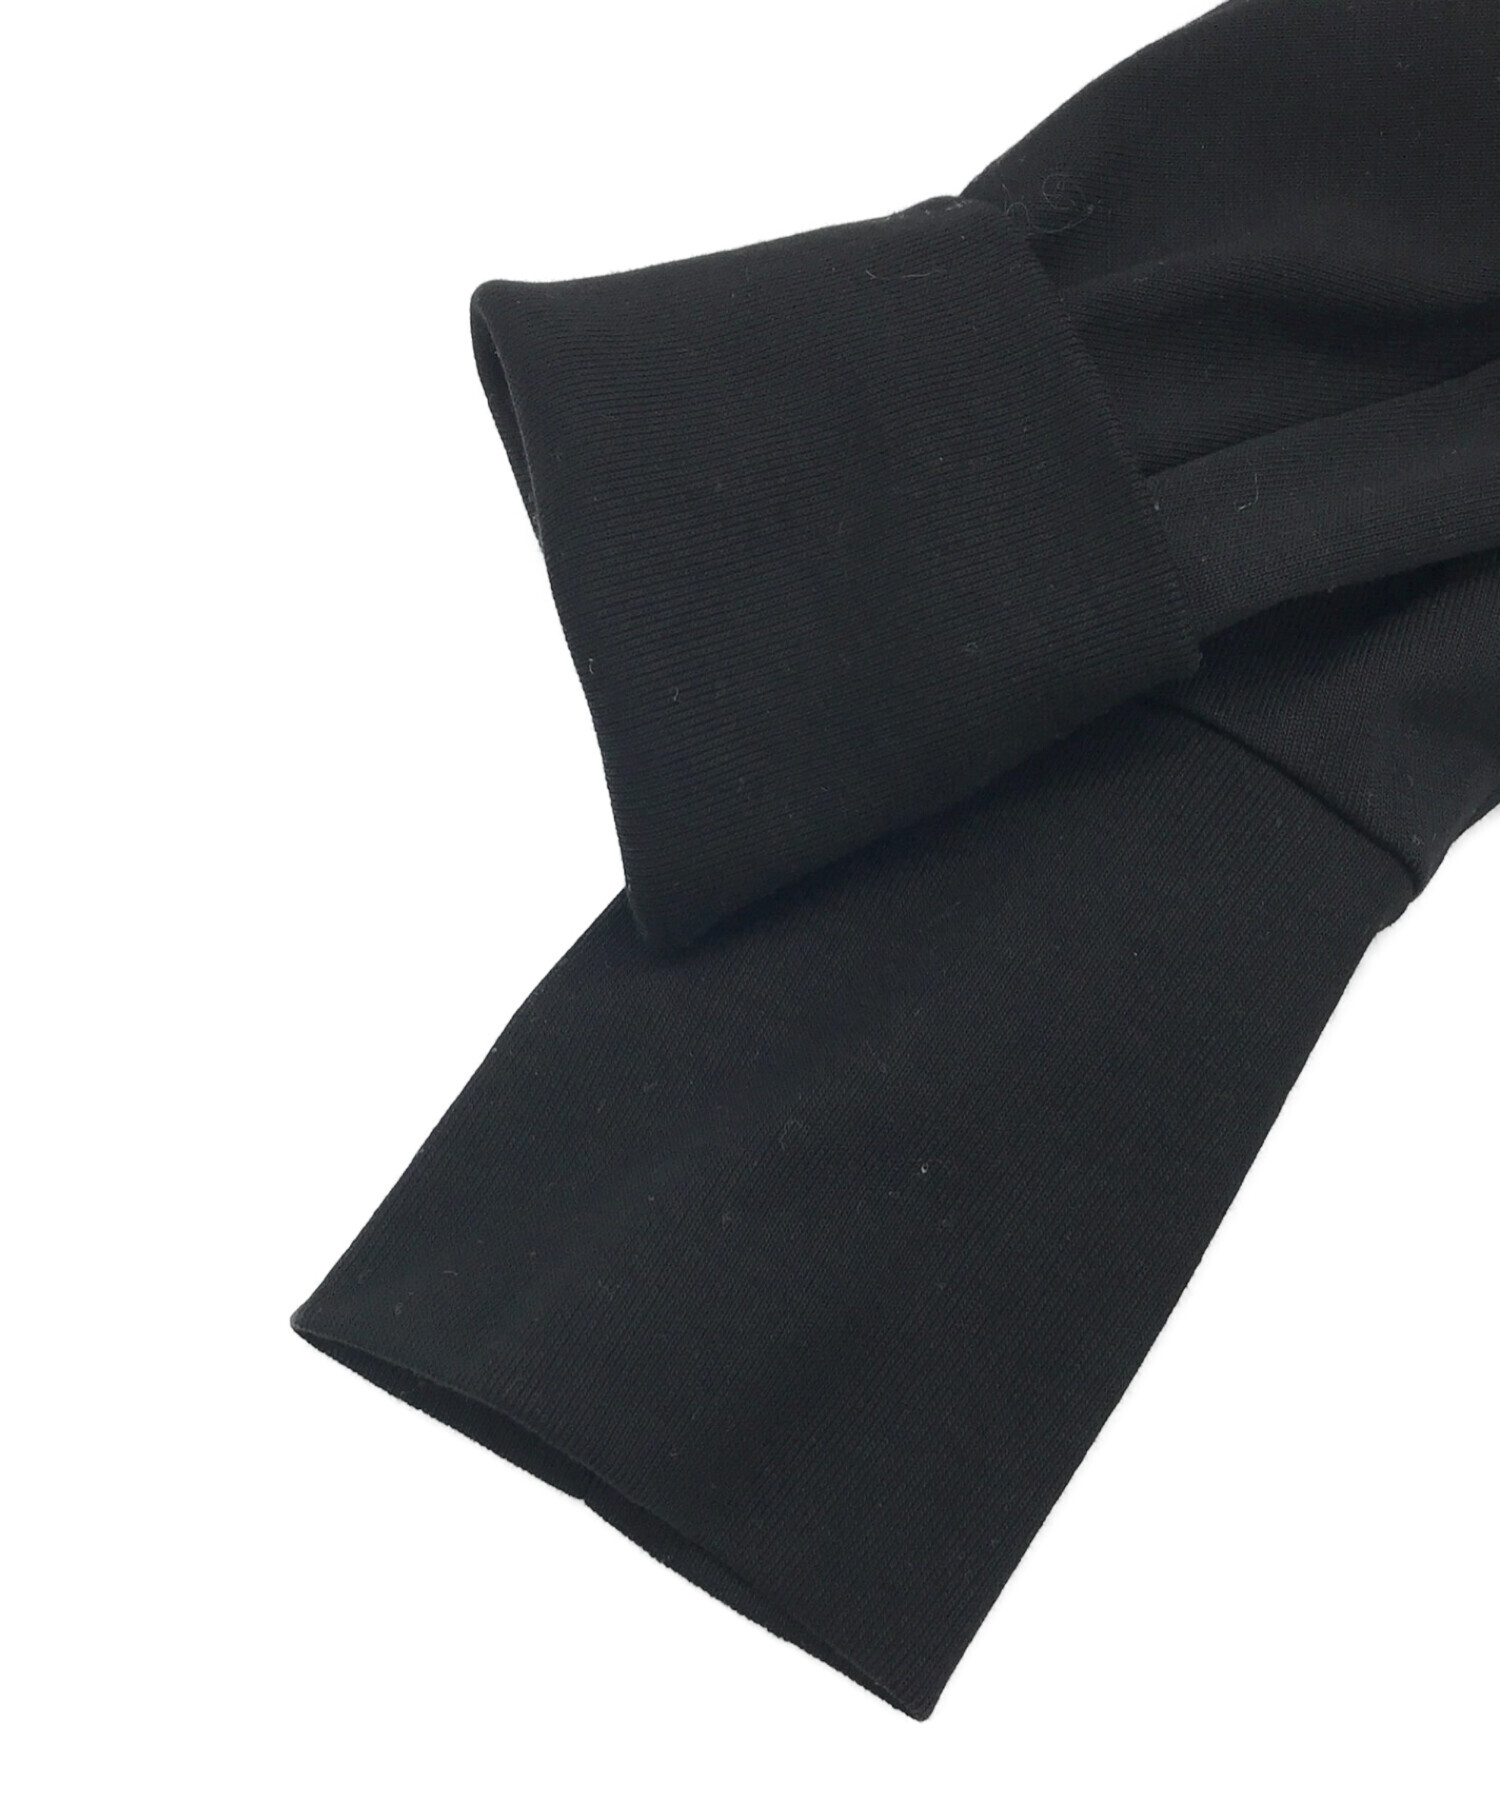 mame kurogouchi (マメクロゴウチ) V-Neck Classic Cotton Dress ブラック サイズ:1